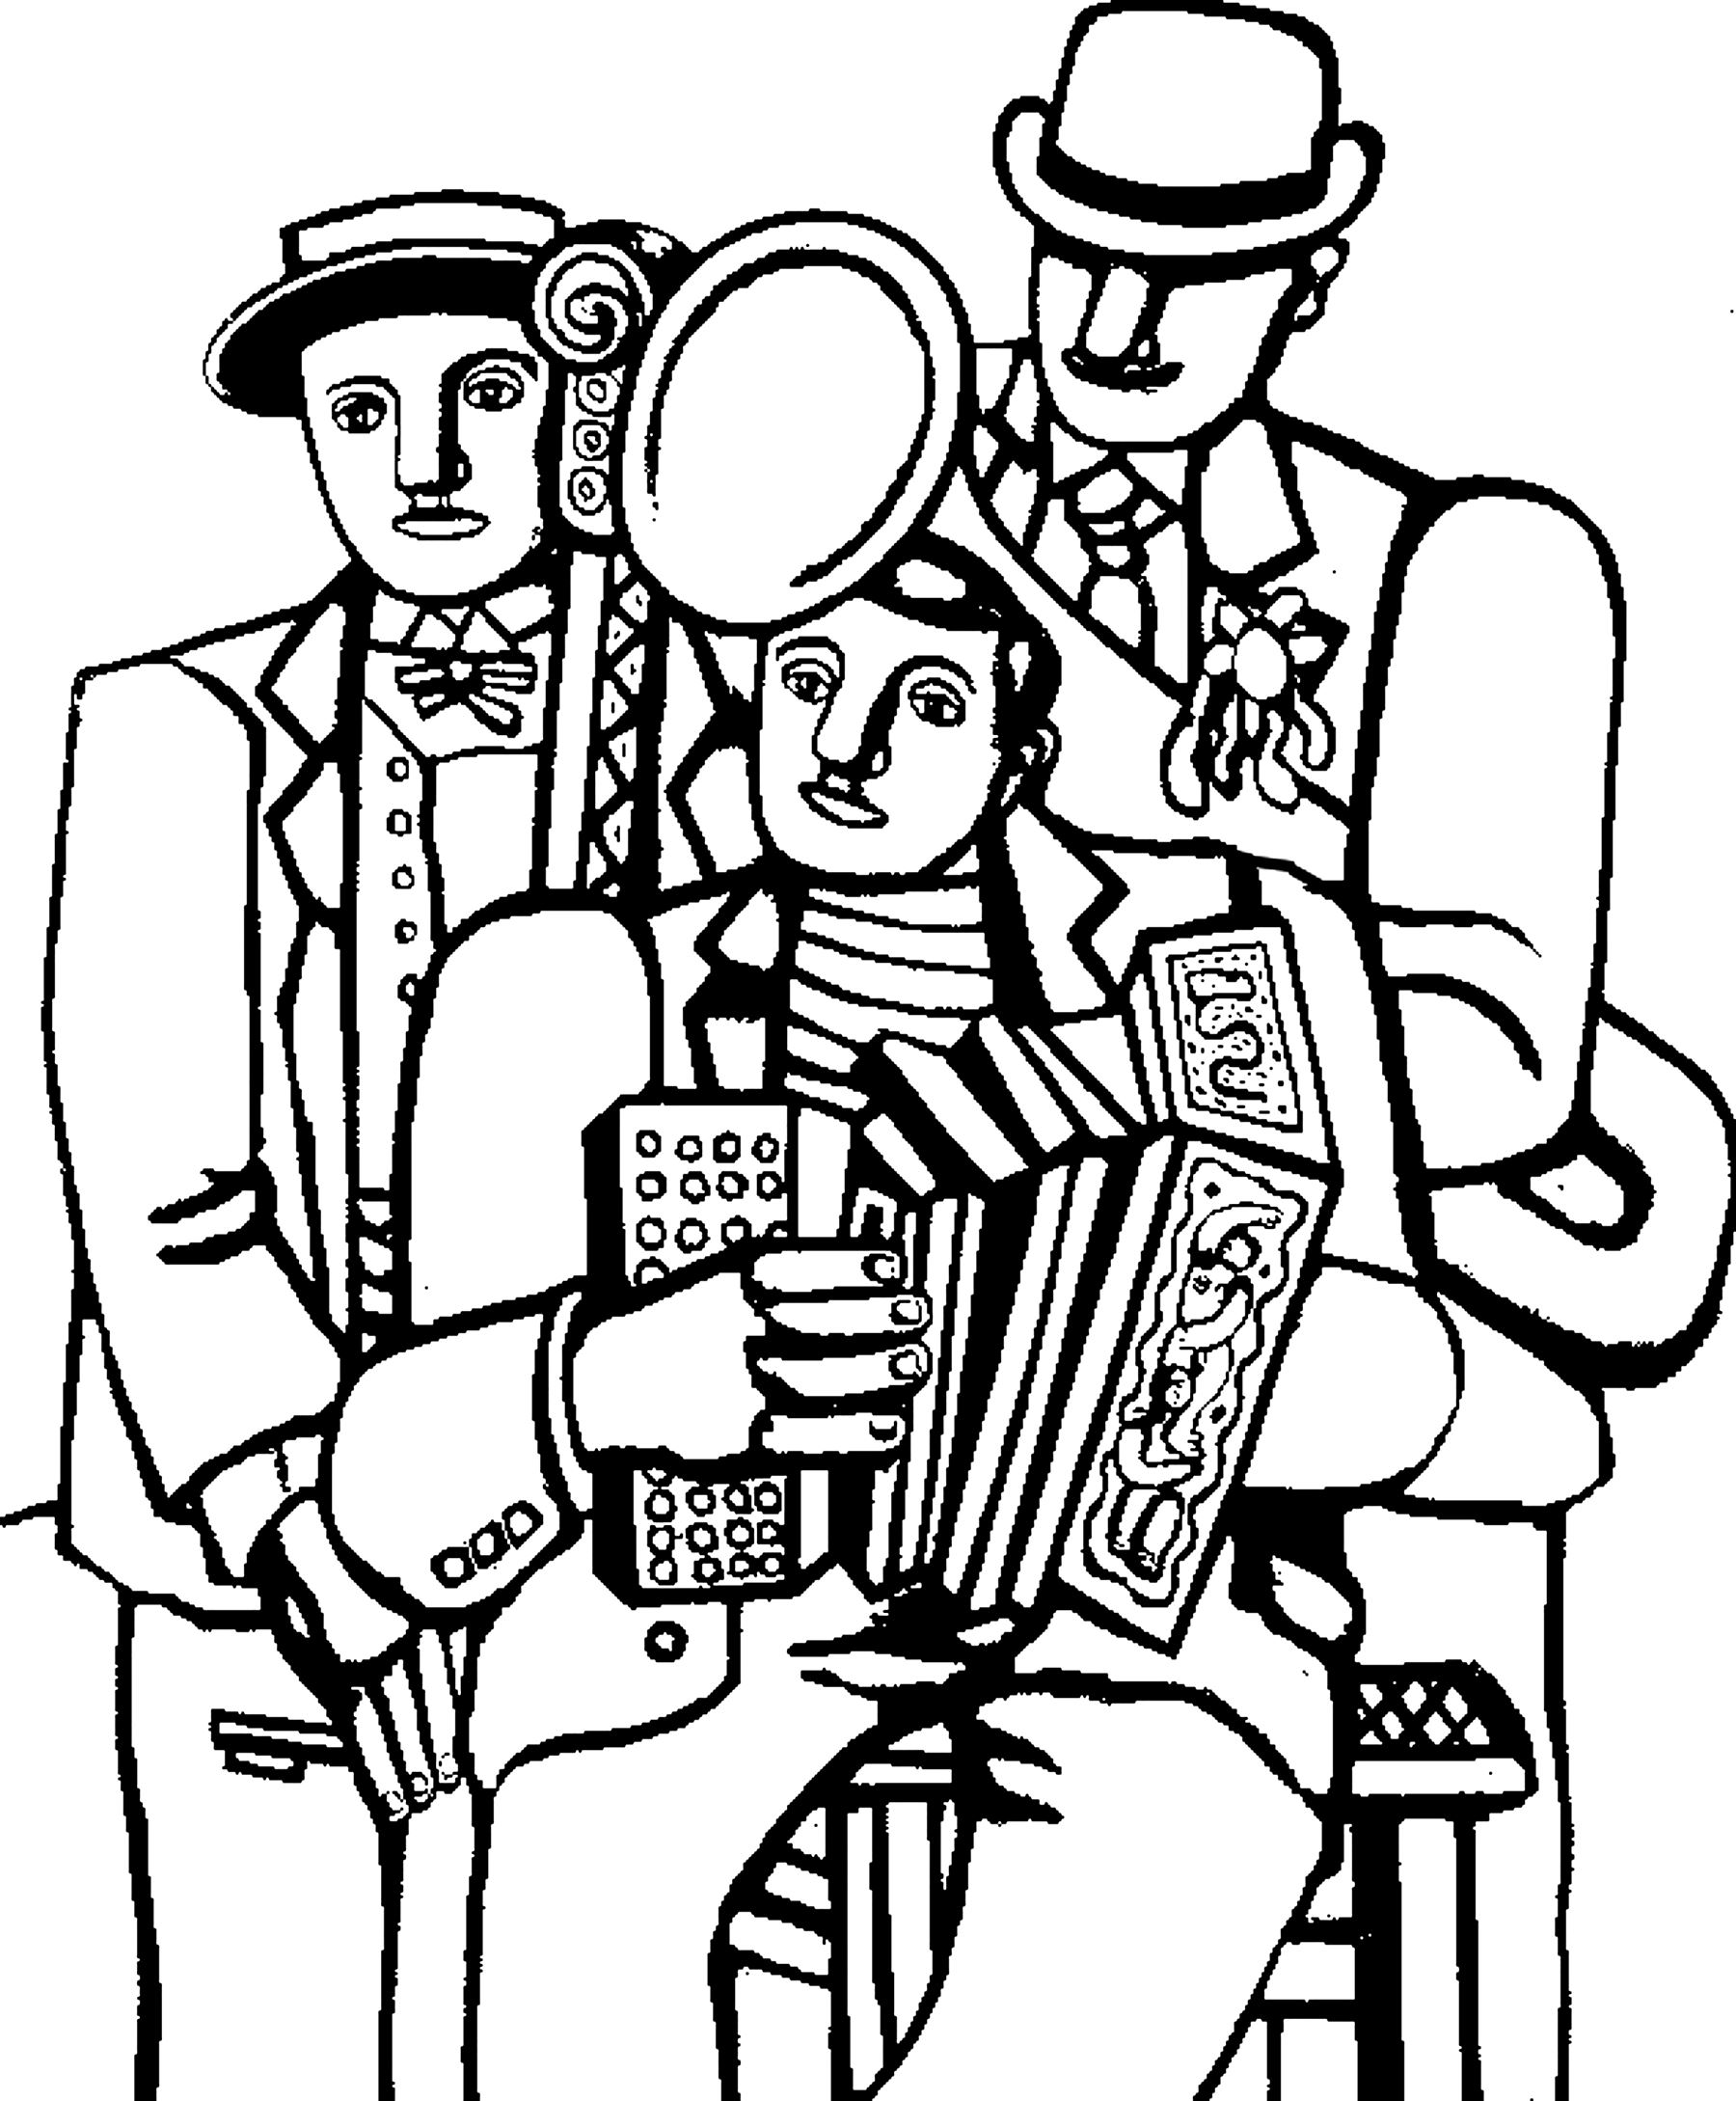 Fernand leger   tres músicos - Esta imagen contiene : Música, Fernand Leger